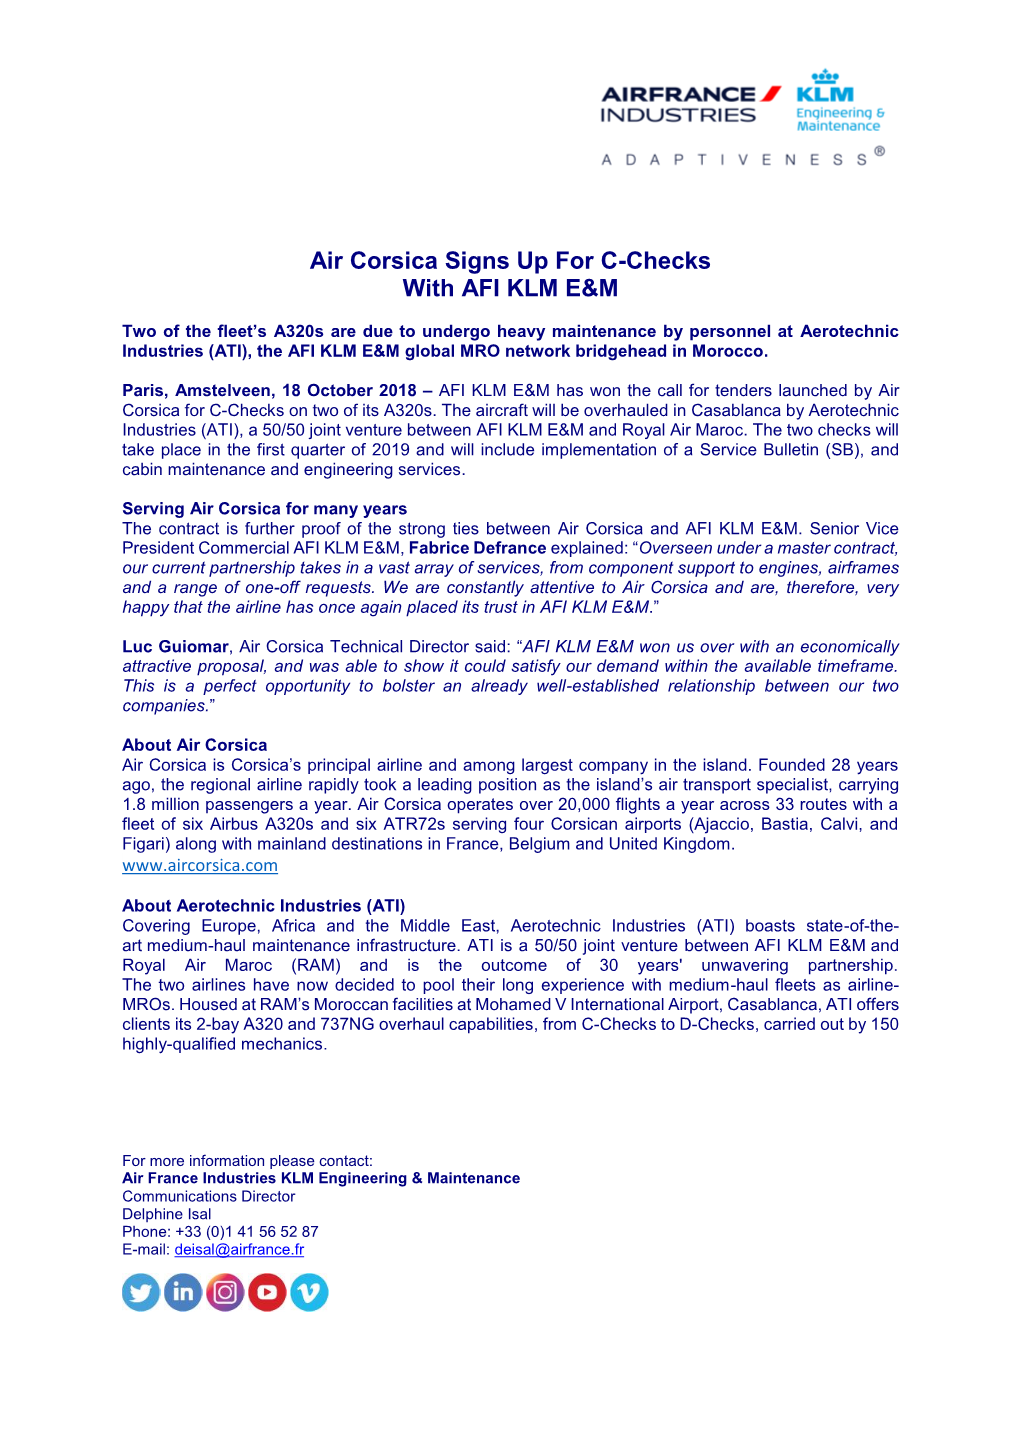 Air Corsica Signs up for C-Checks with AFI KLM E&M